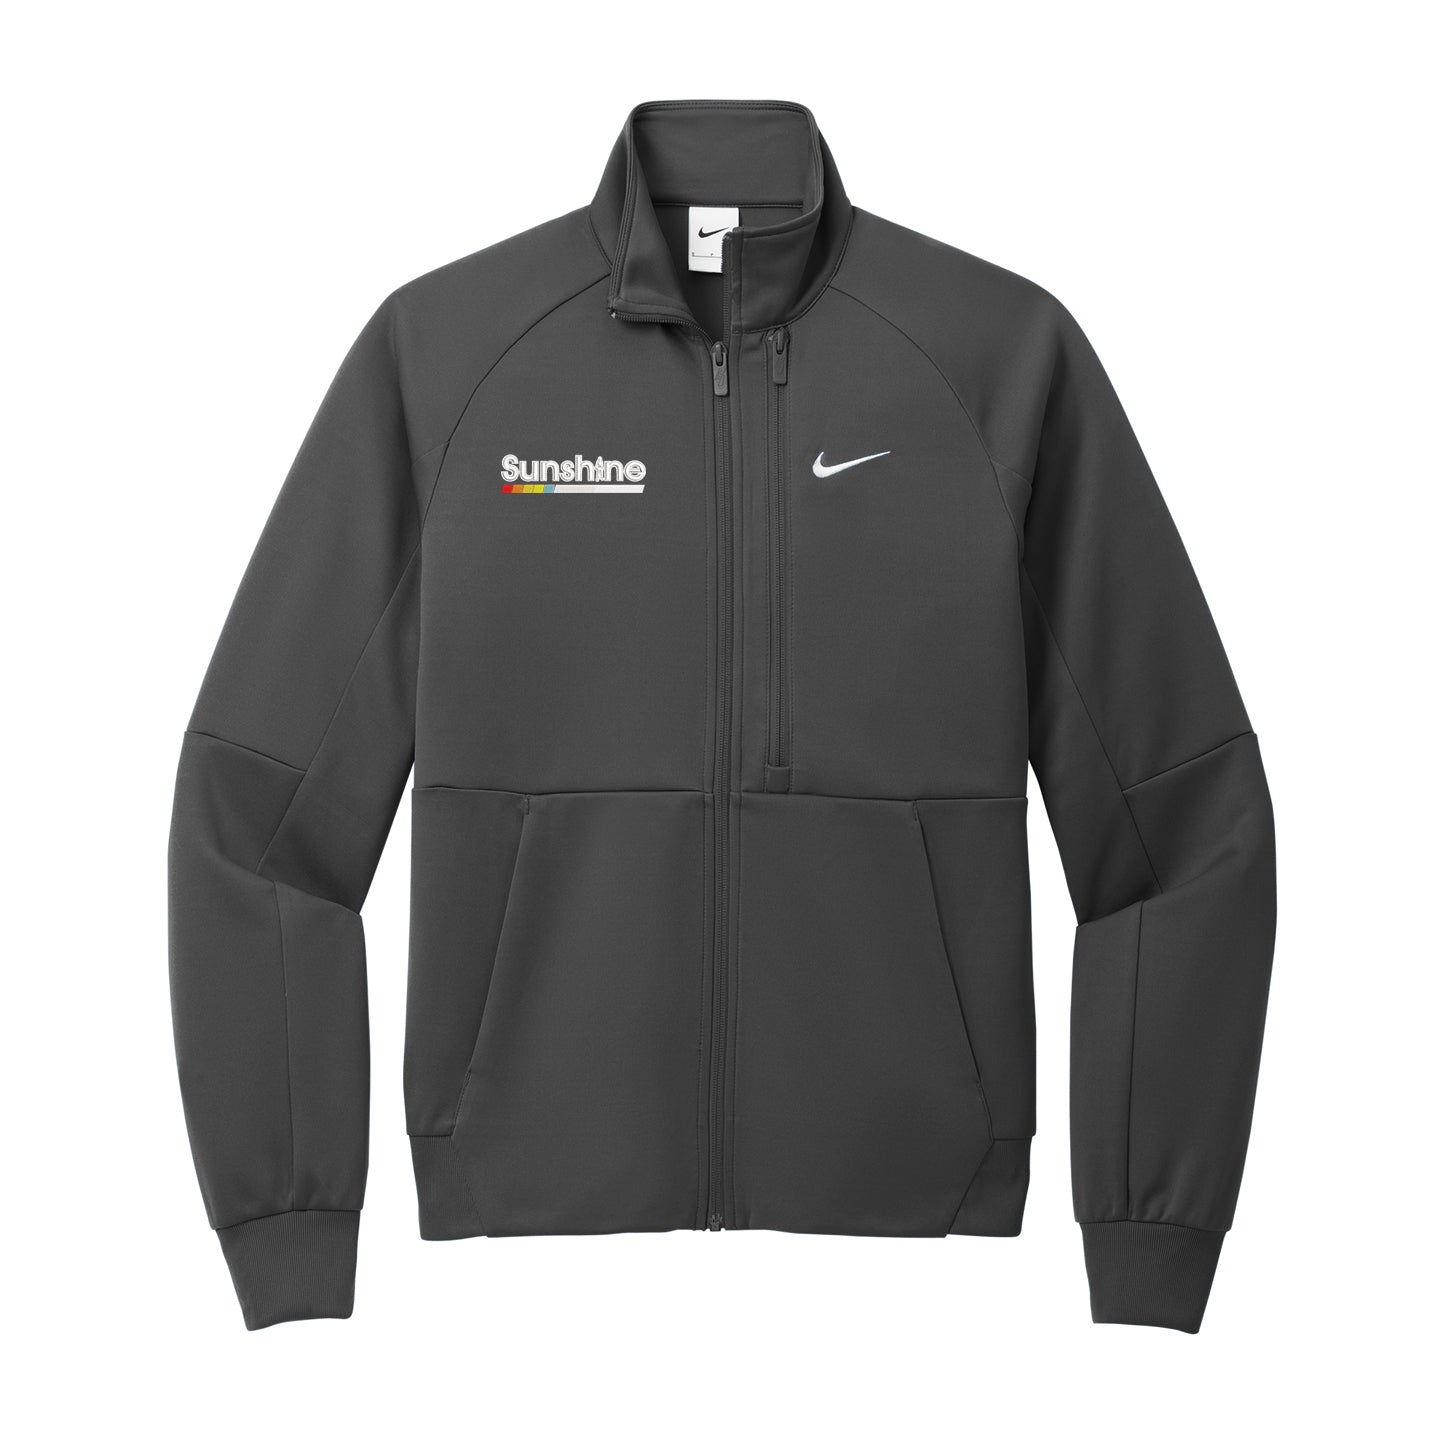 Nike + SUNSHINE Full Zip Swoosh Jacket